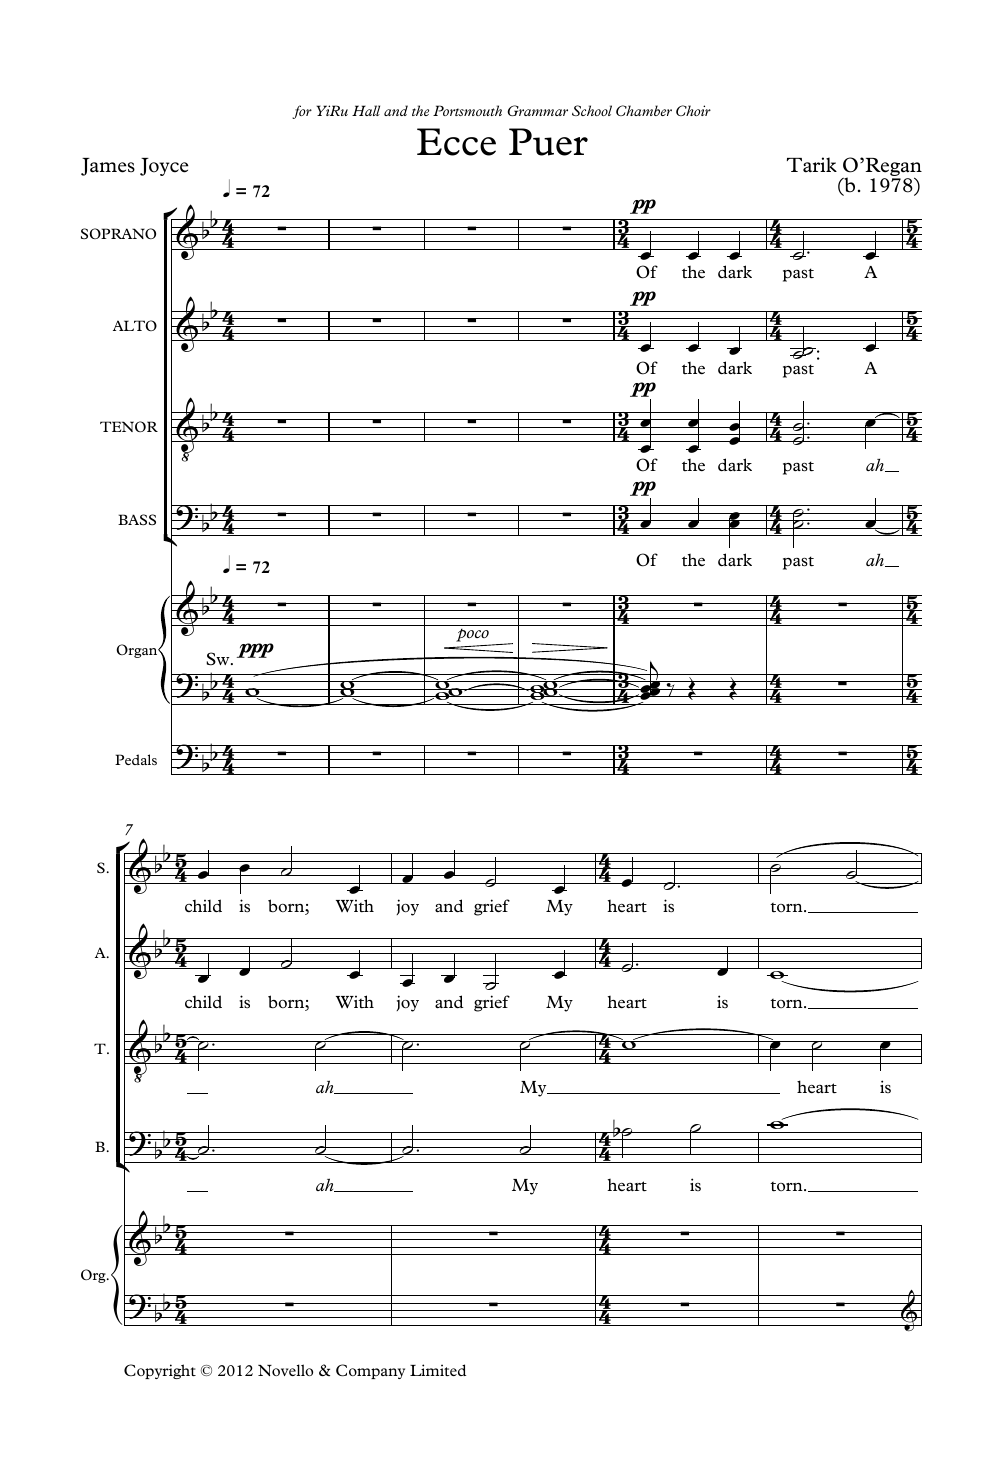 Tarik O'Regan Ecce Puer Sheet Music Notes & Chords for SATB Choir - Download or Print PDF